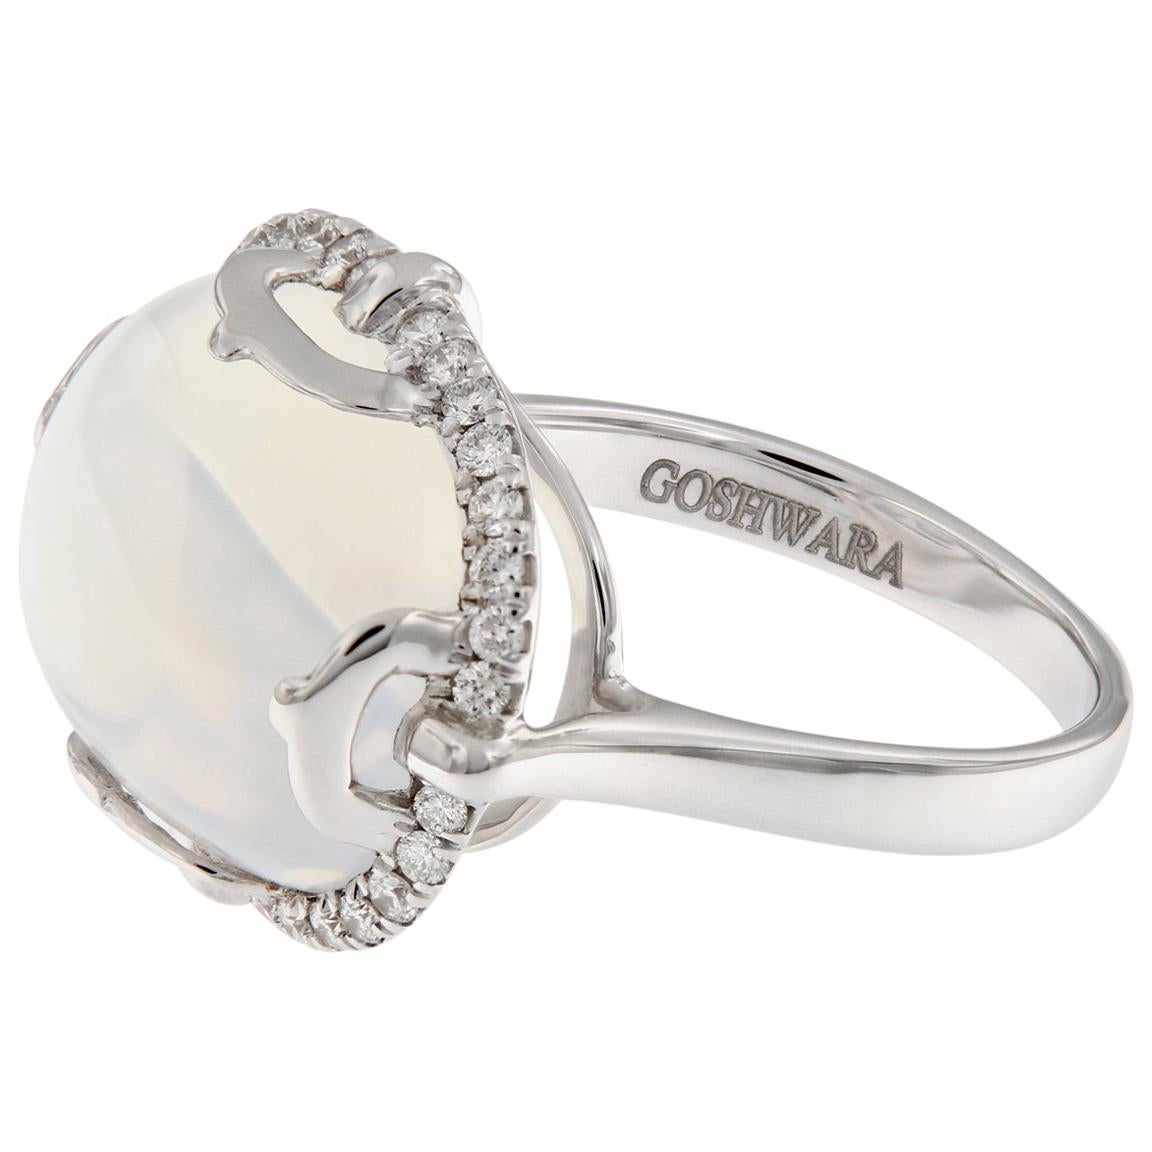 Goshwara “Rock-N-Roll” Cabochon Moon Quartz Diamond 18 Karat White Gold Ring For Sale